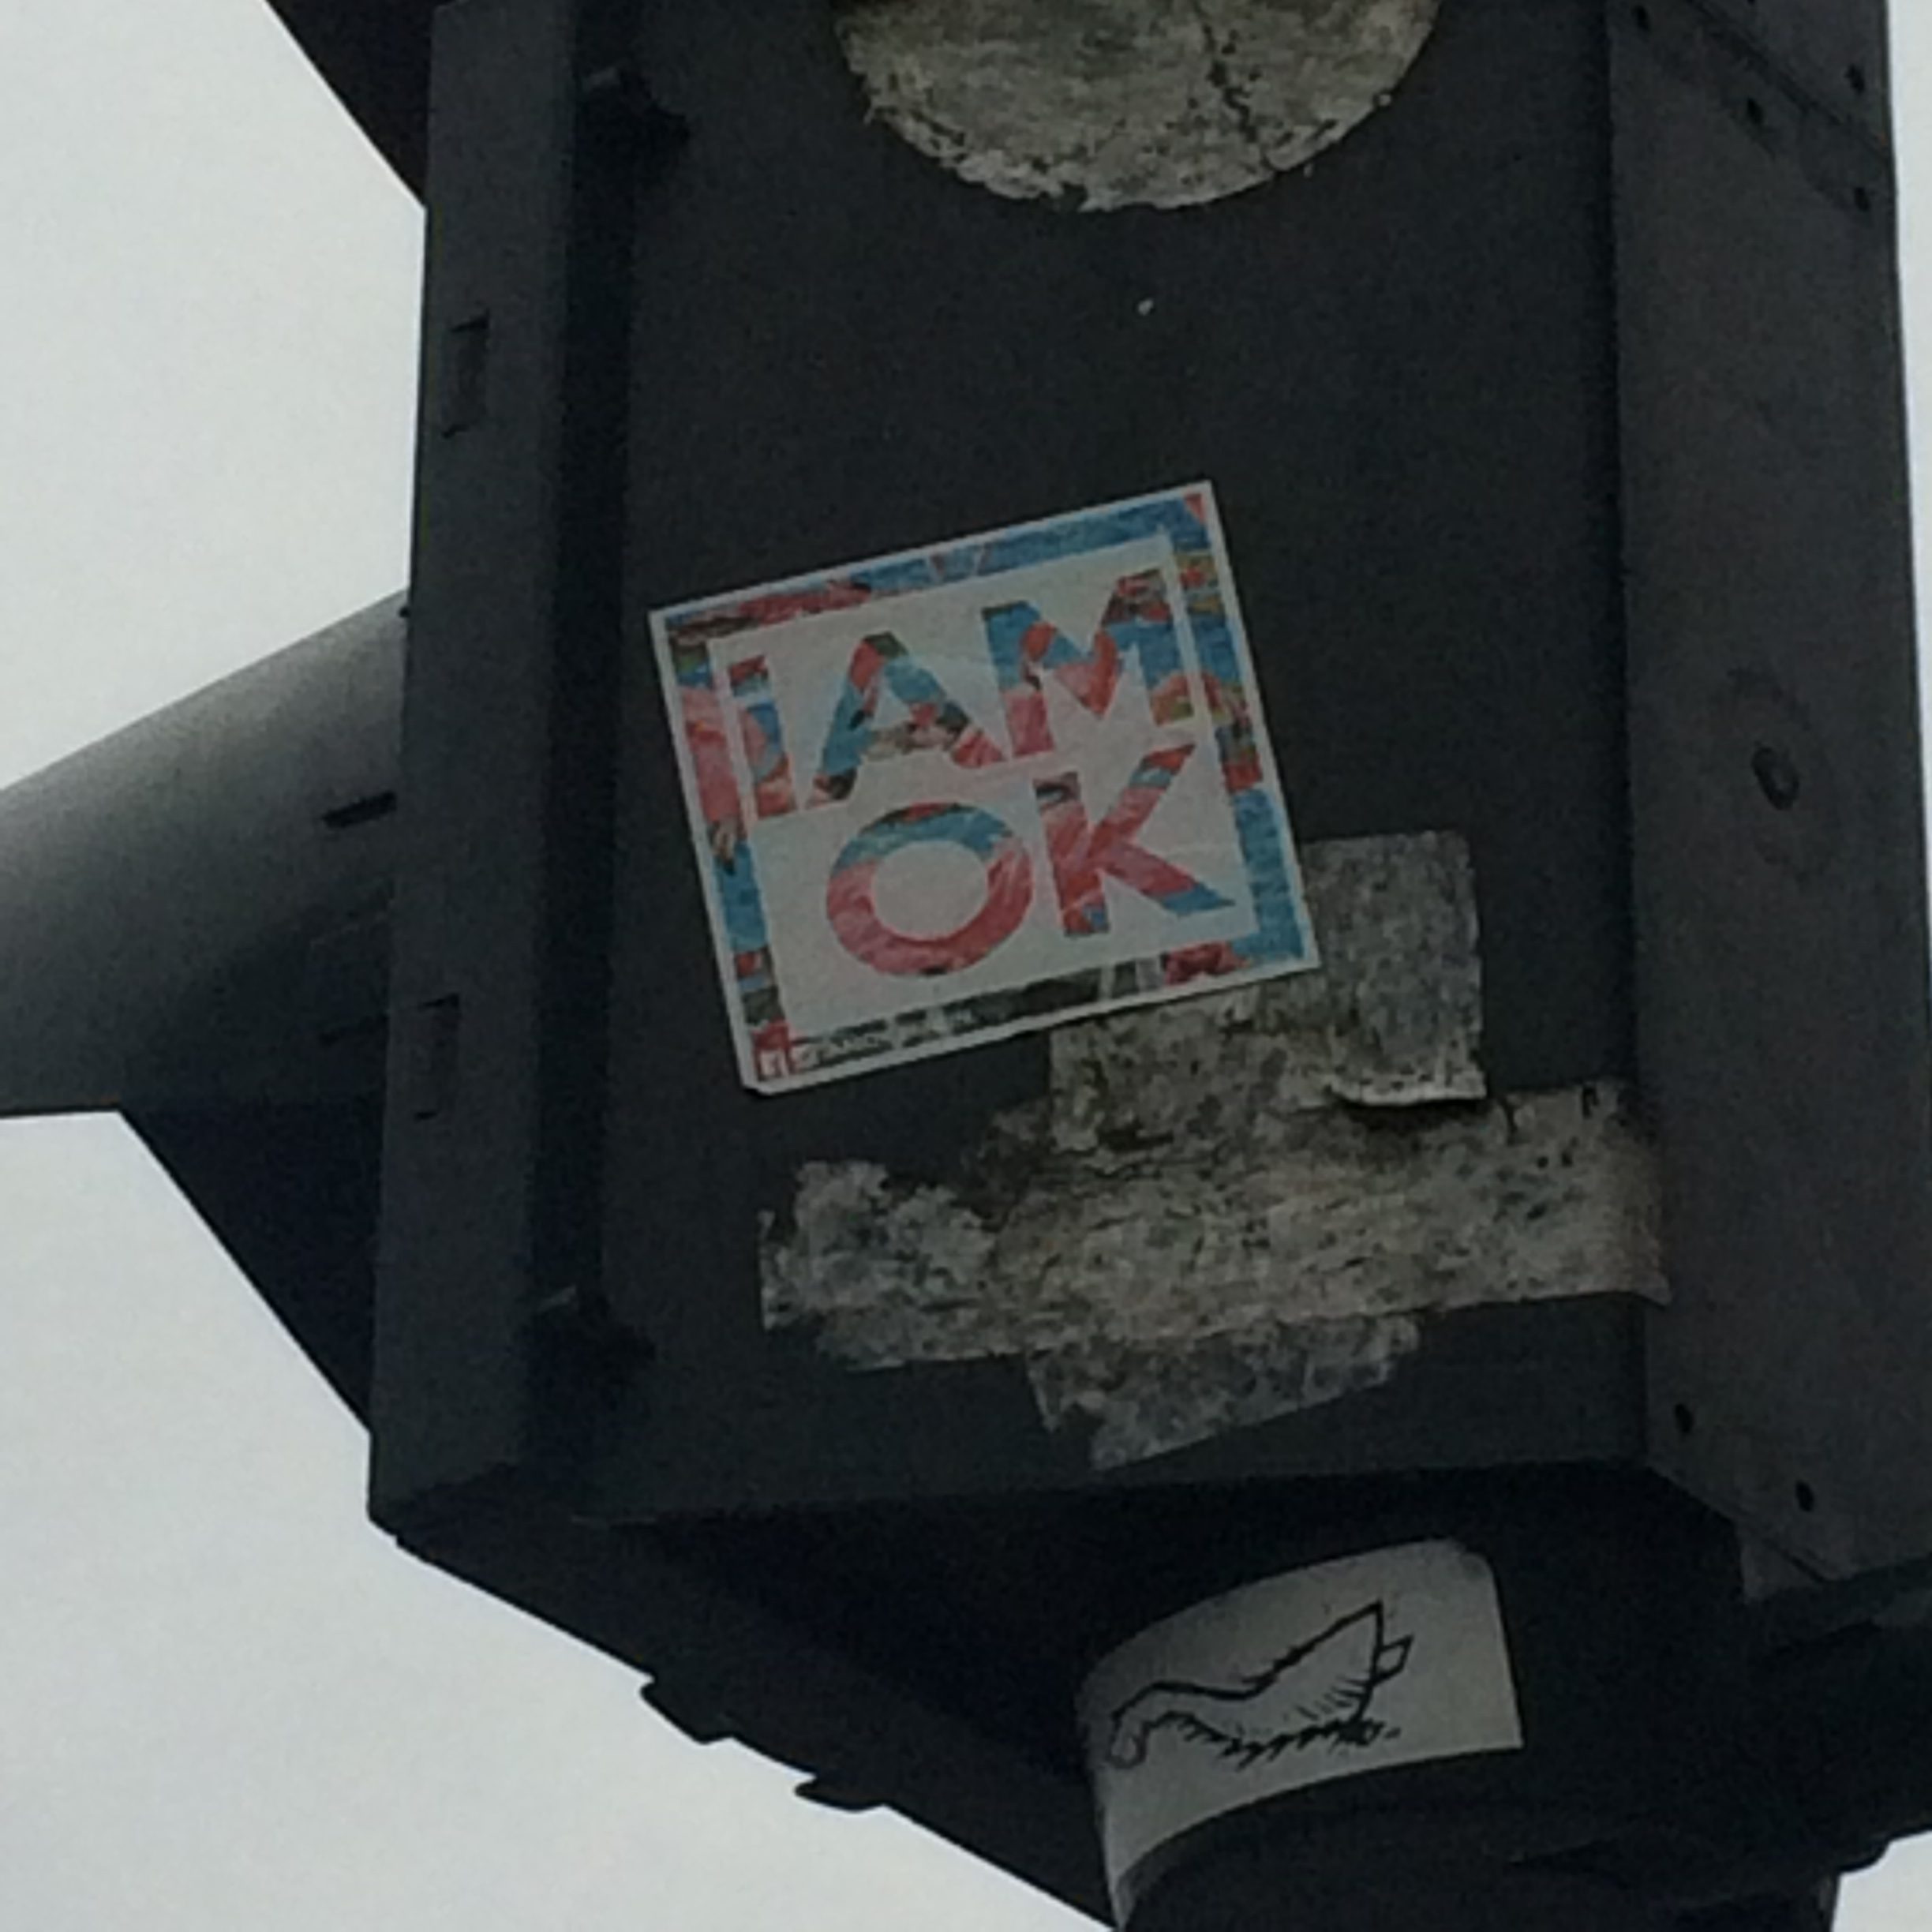 I am OK sticker Alexanderplatz Berlin